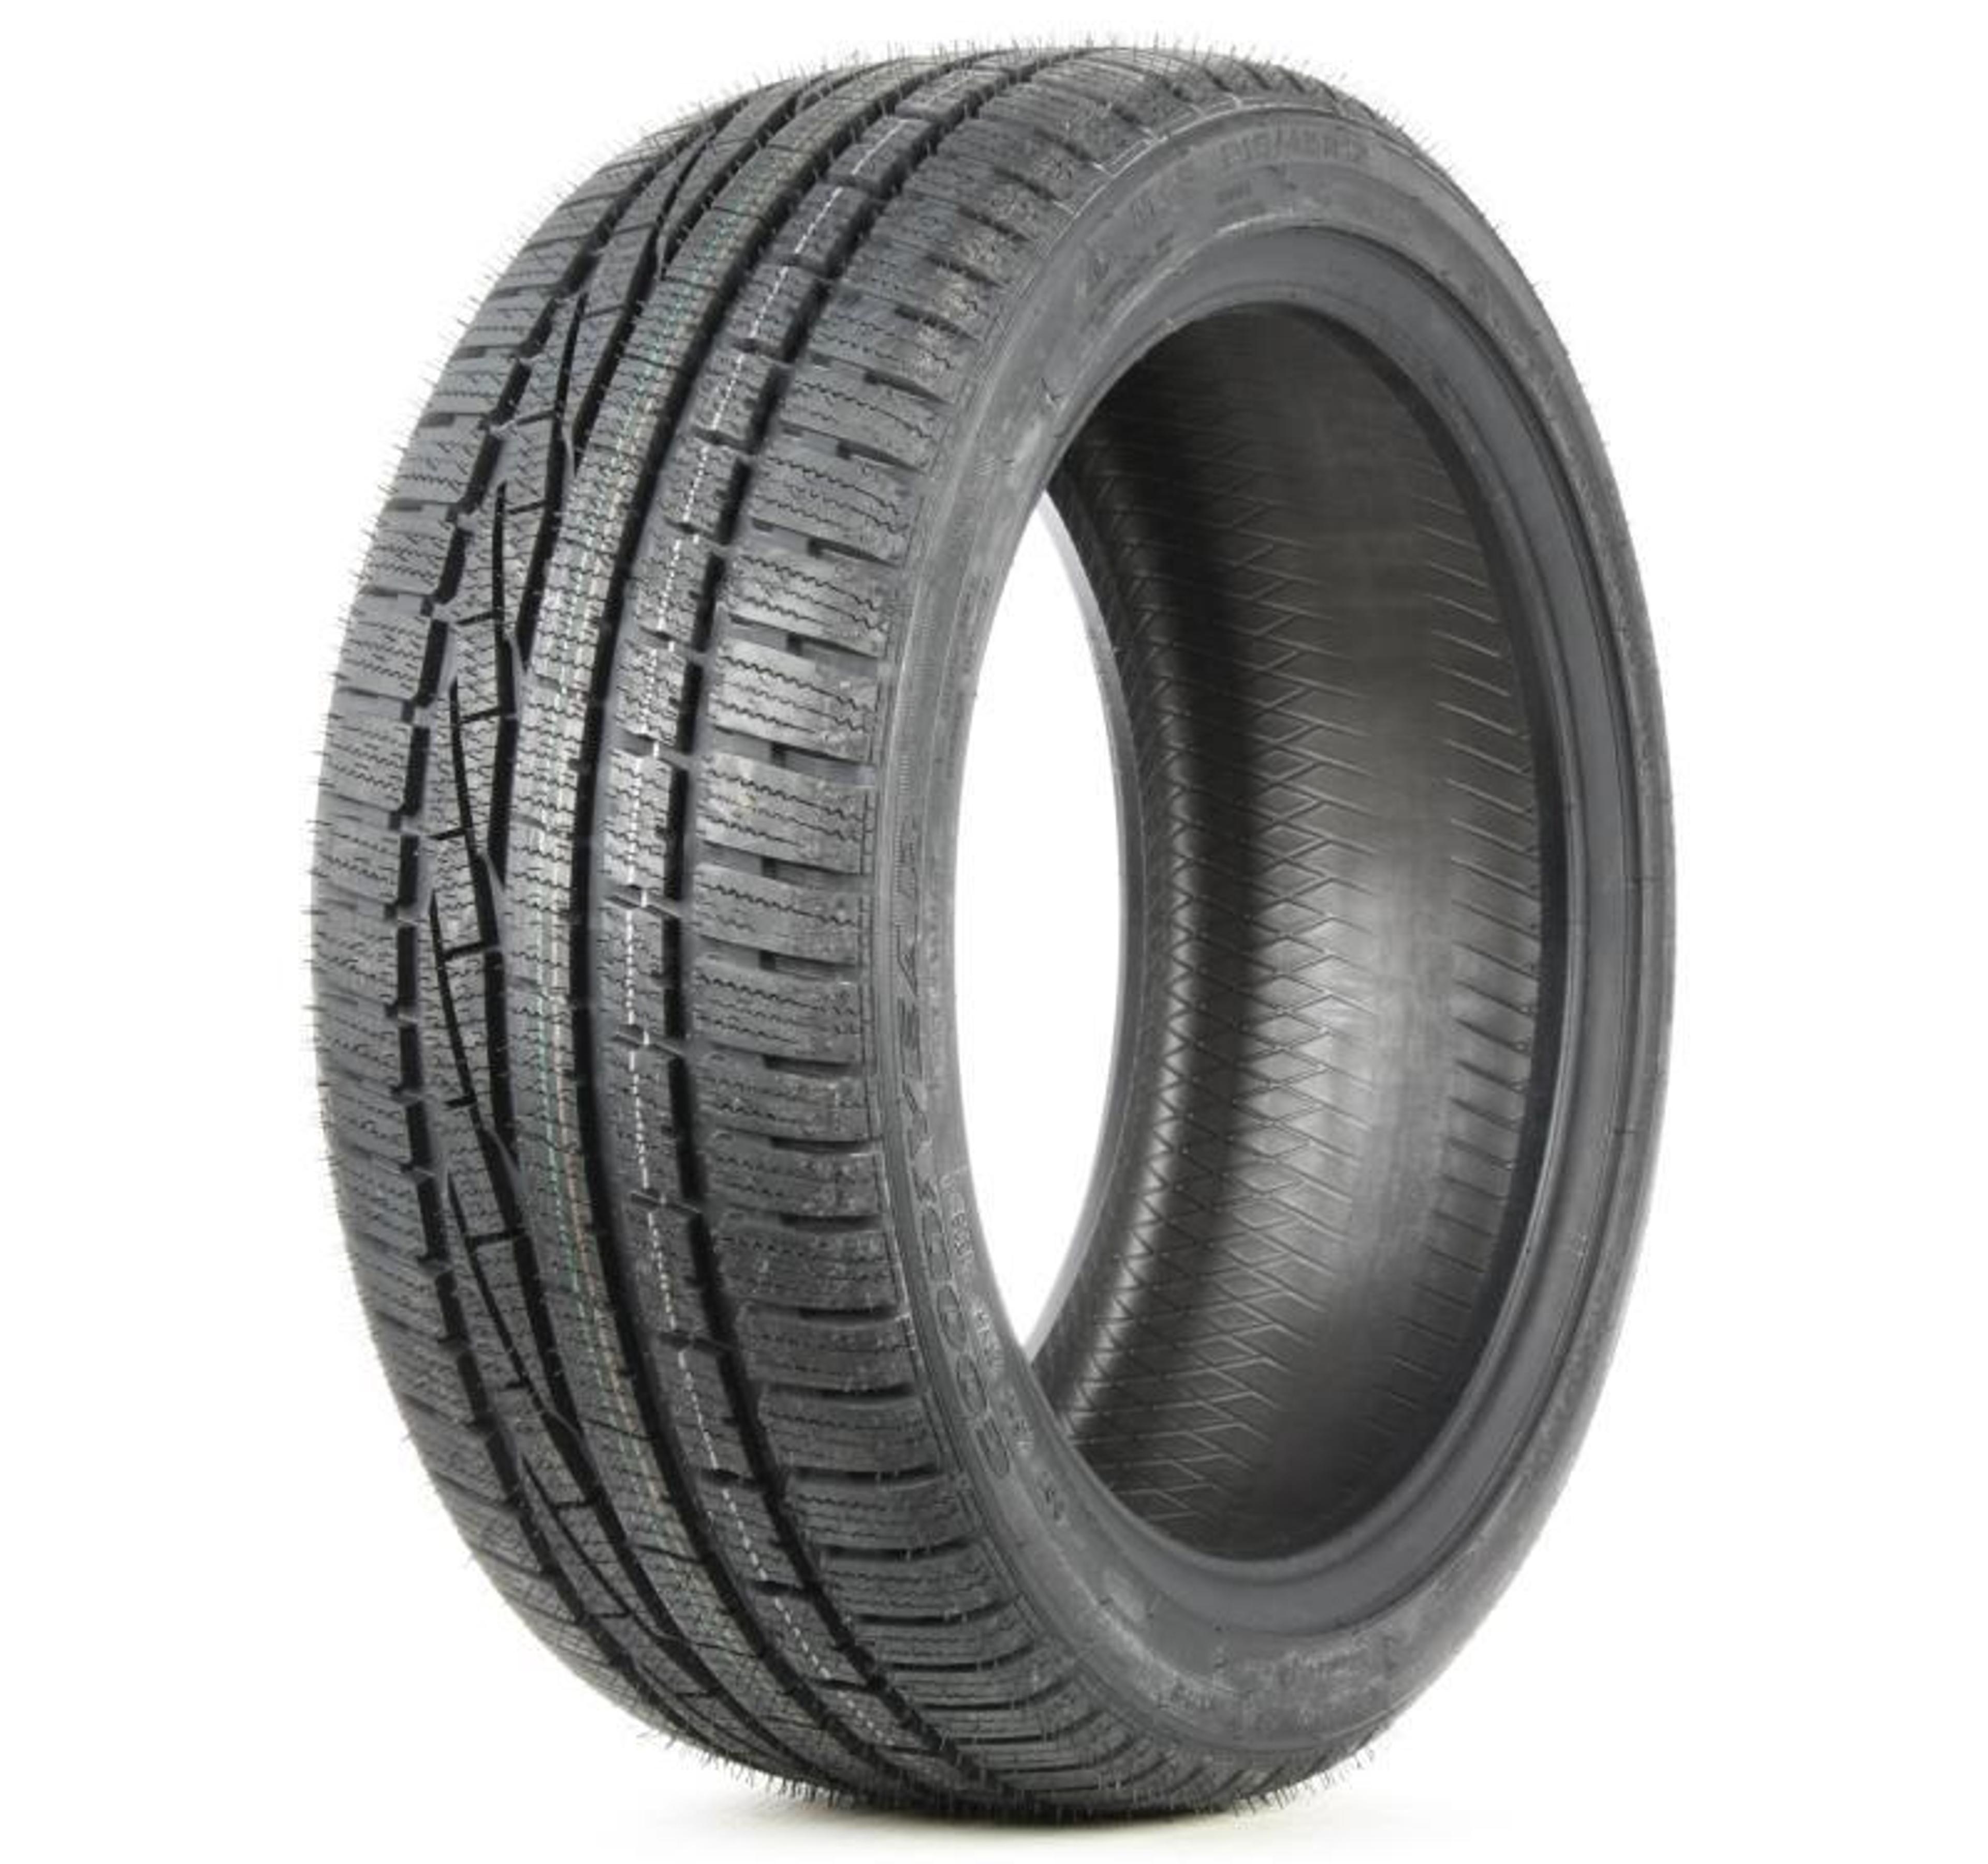 Online Grip Tires Ultra Performance Goodyear SimpleTire | Buy